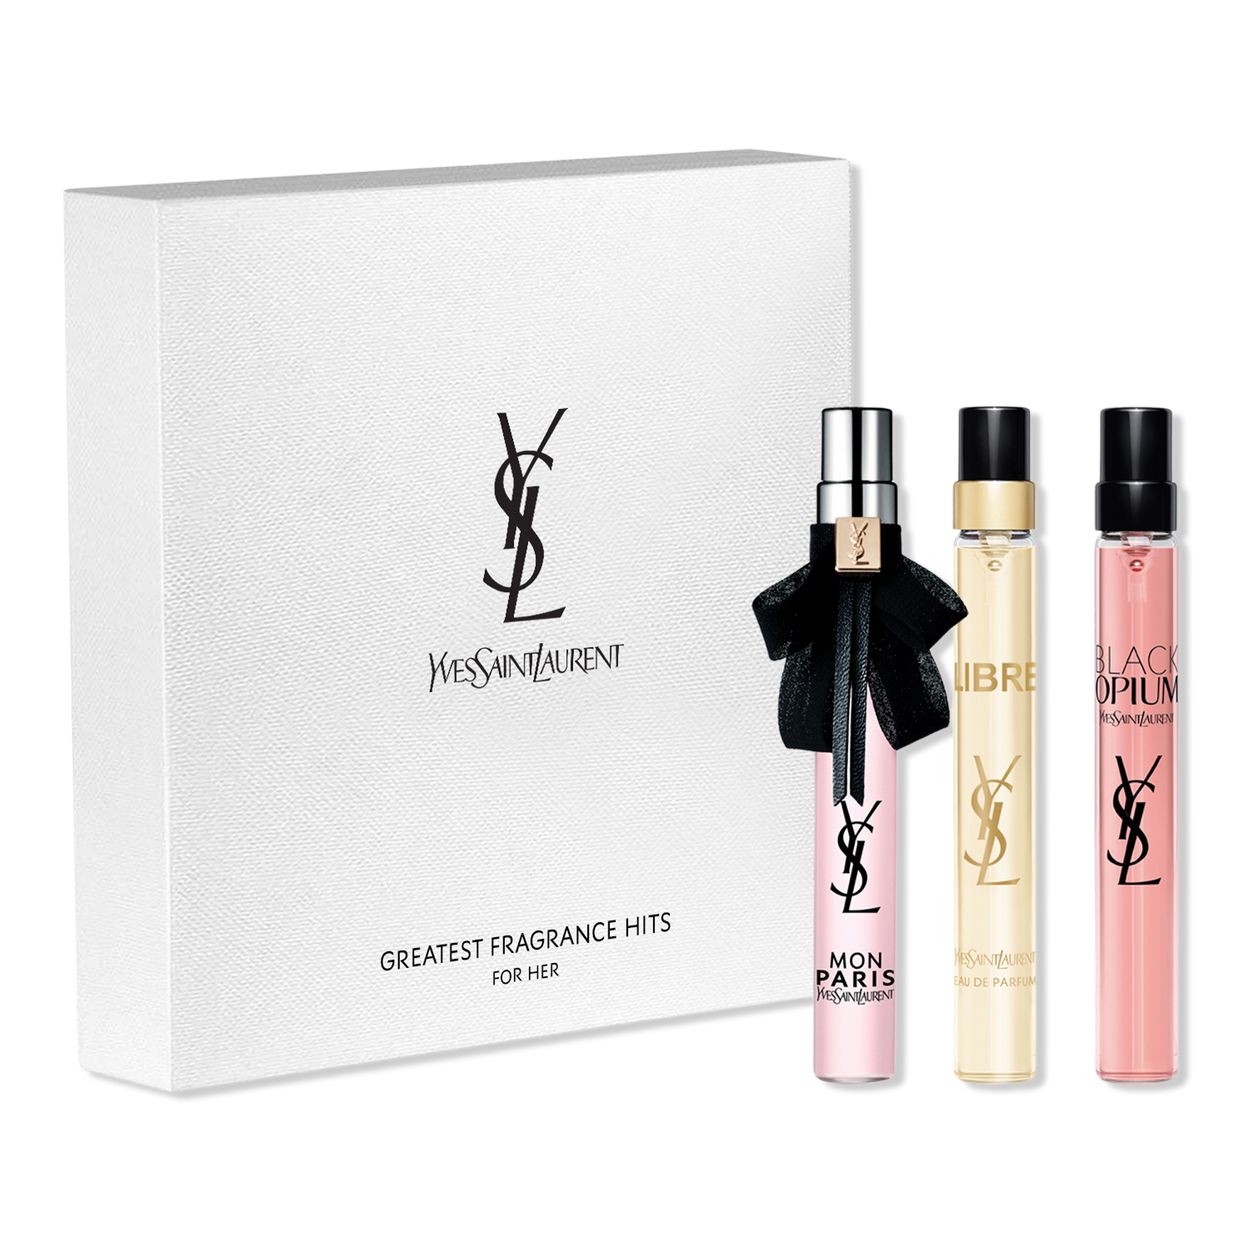 YSL Women's Perfume Discovery Gift Set | Ulta